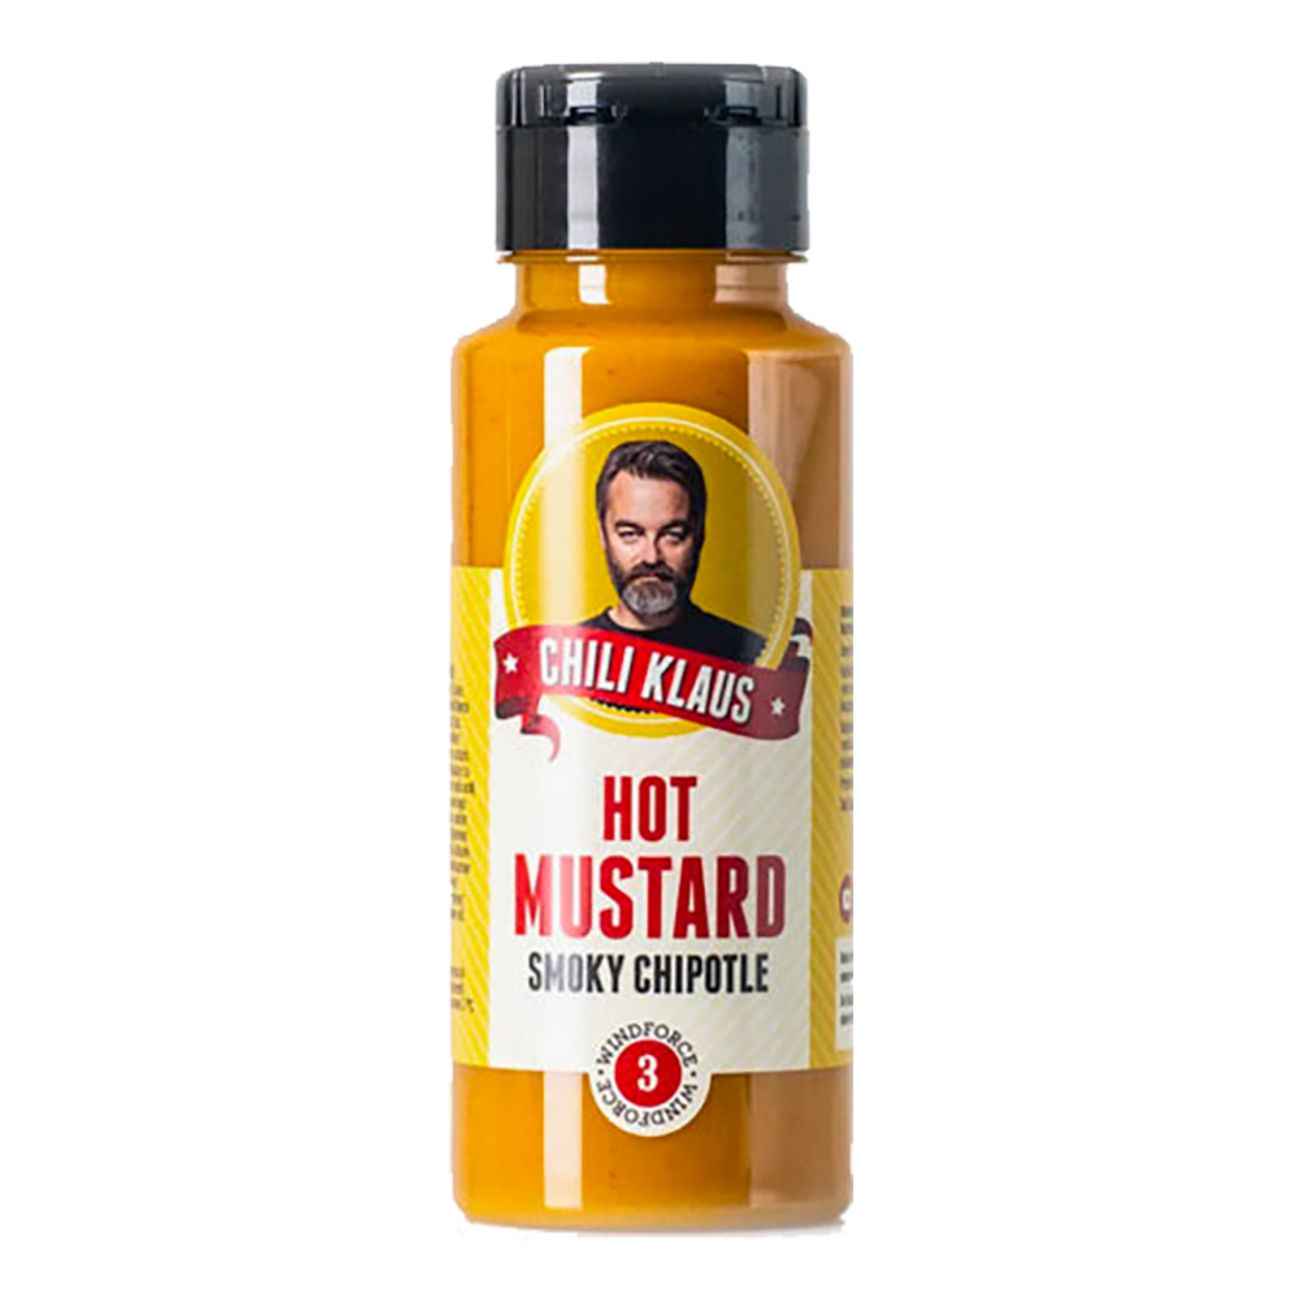 hot-mustard-smoky-chipotle-89187-1